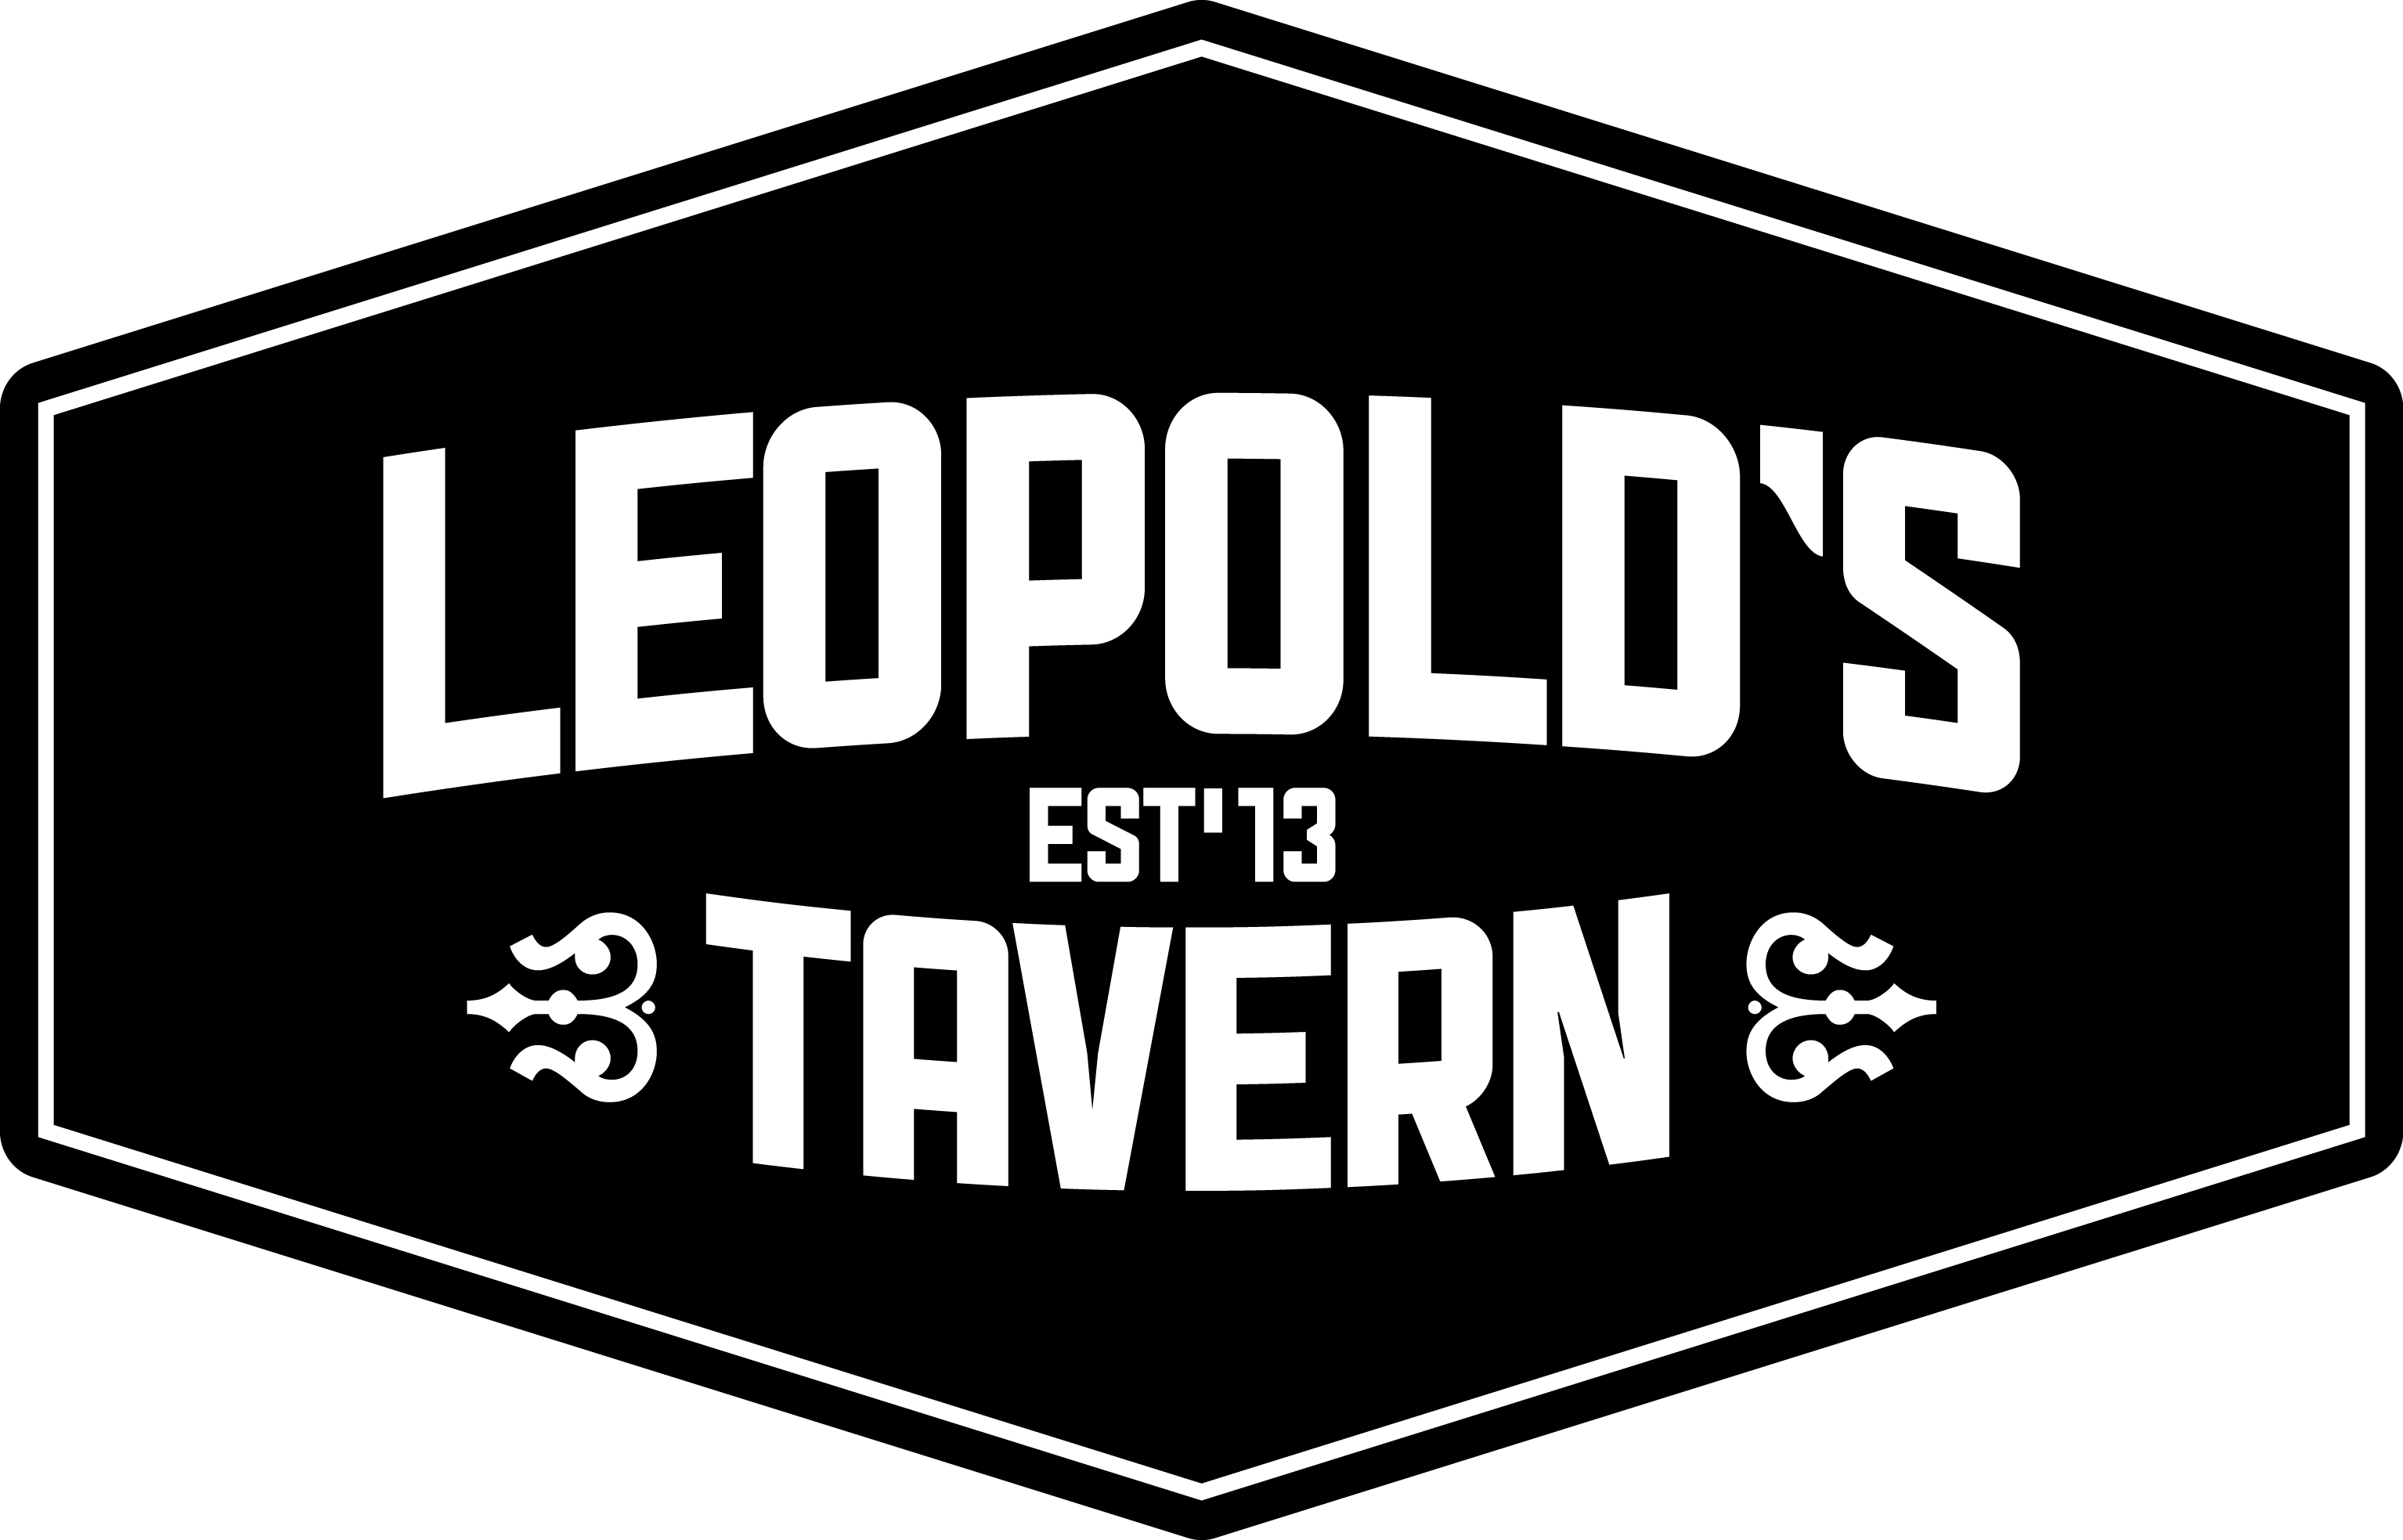 Leopold's Tavern